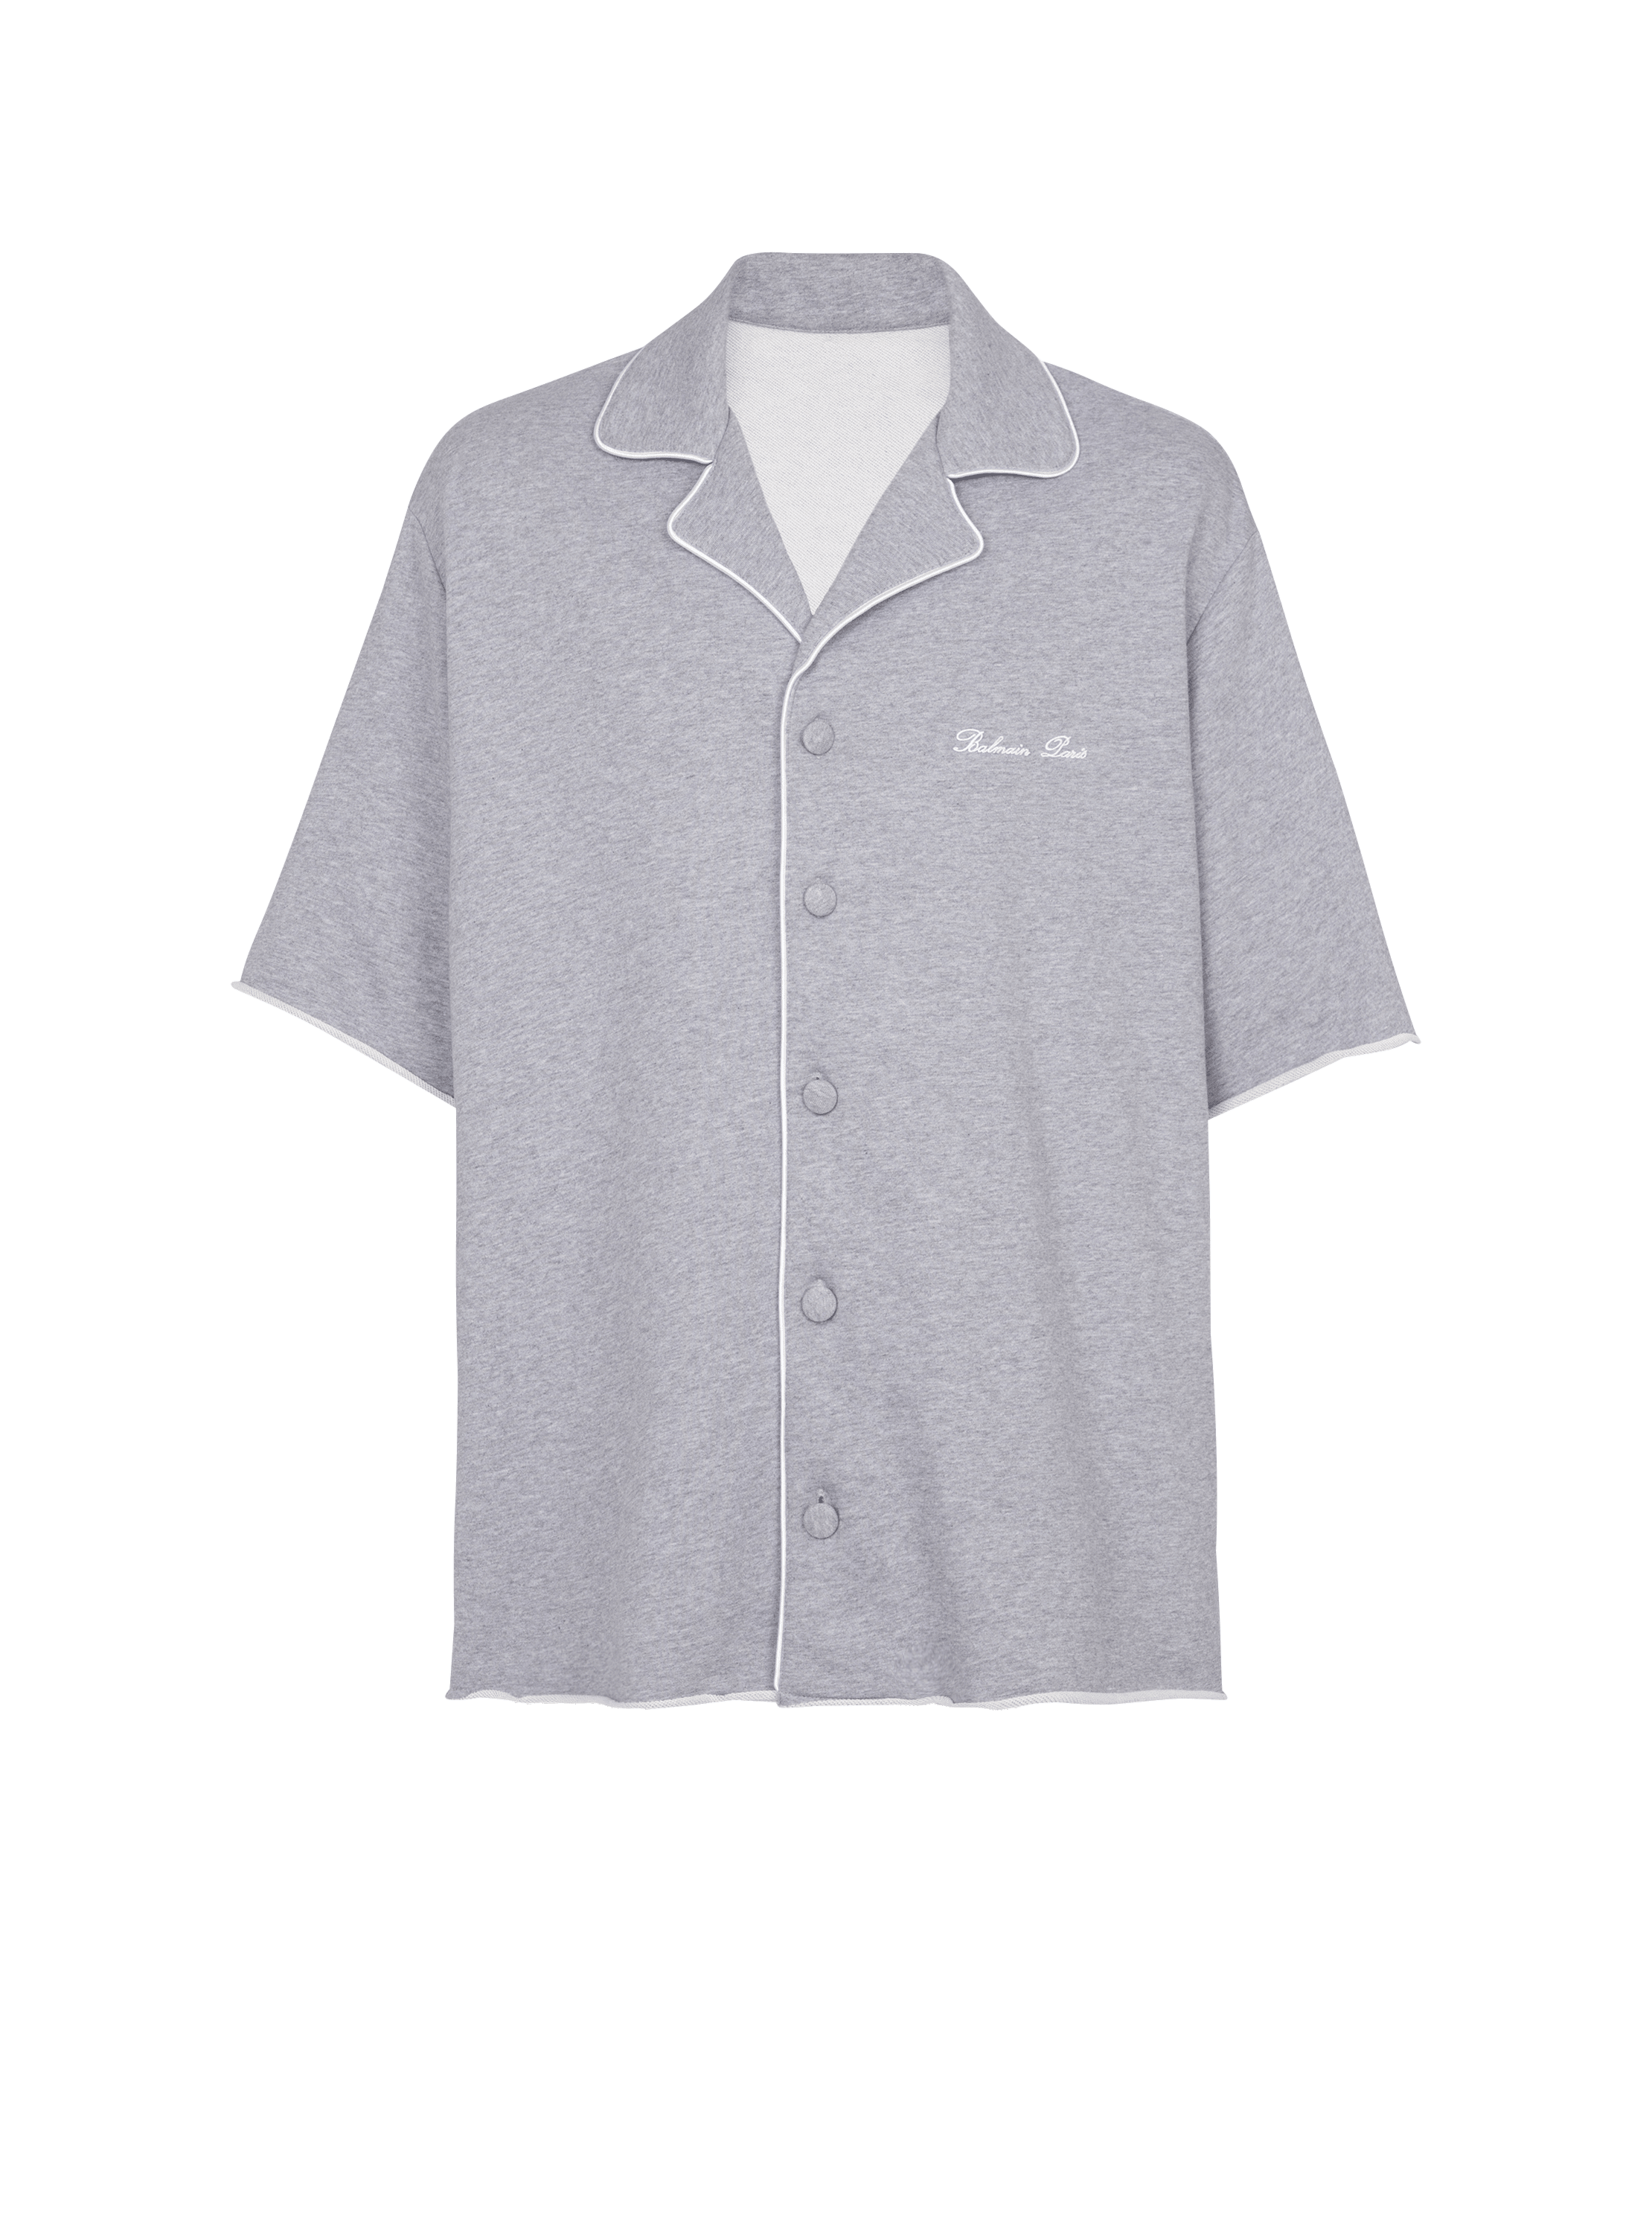 Balmain Signature short-sleeved shirt in jersey, grey, hi-res